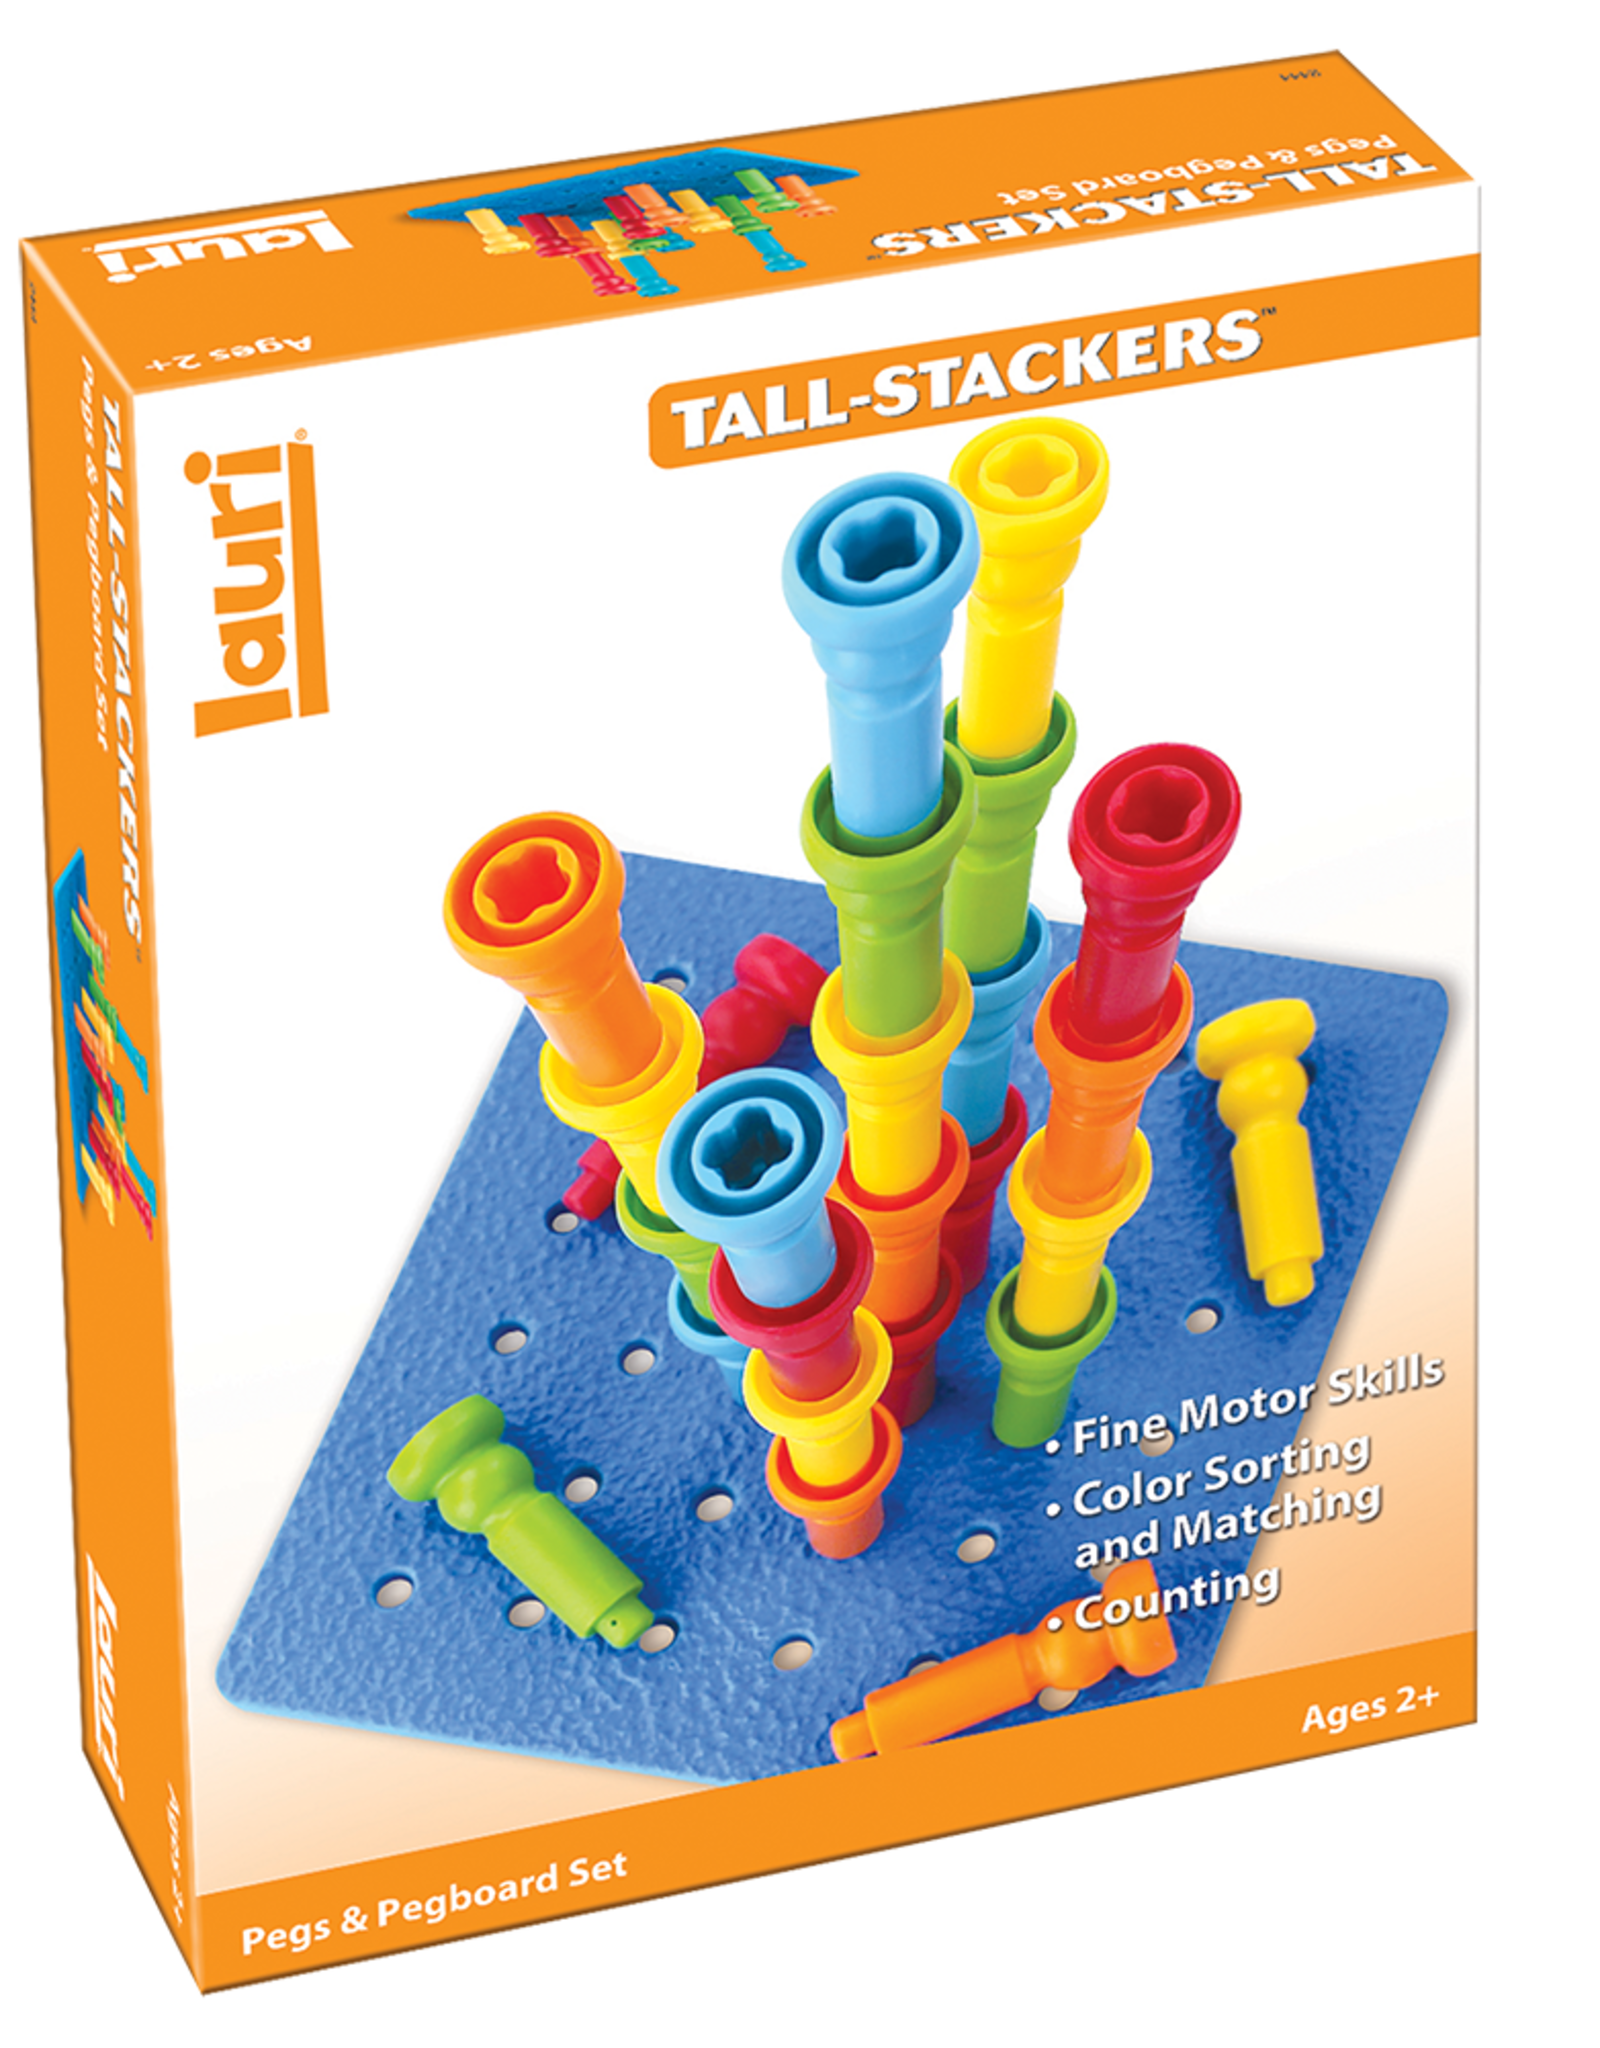 Playmonster Tall-Stacker Pegs & Pegboard Set